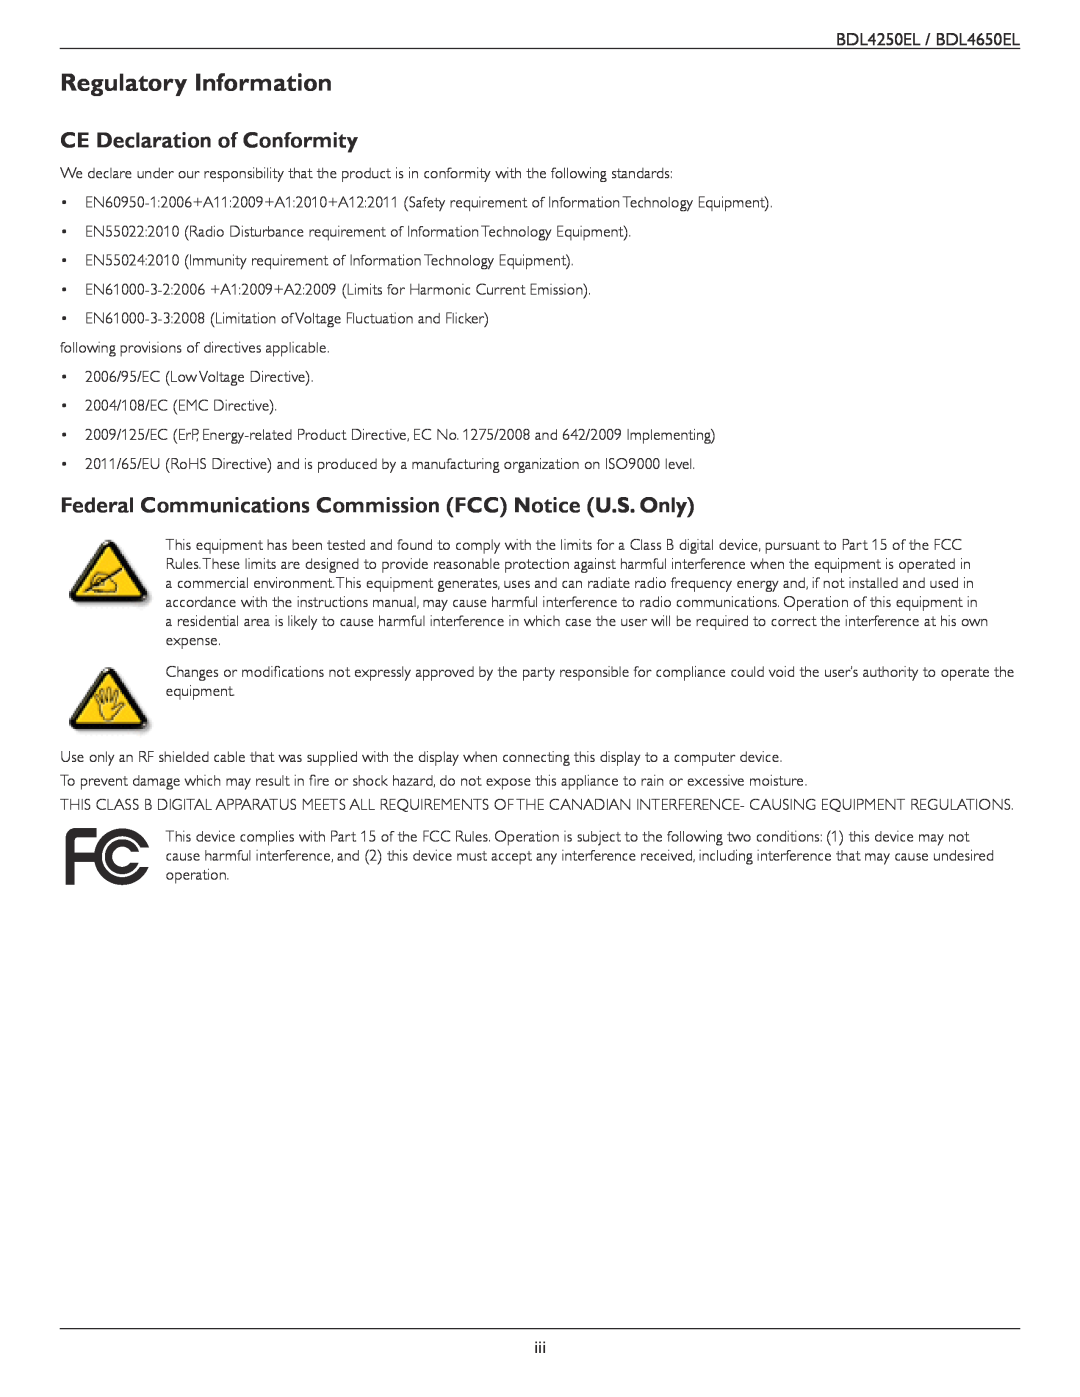 Philips BDL4250EL, BDL4650E user manual Regulatory Information, CE Declaration of Conformity 